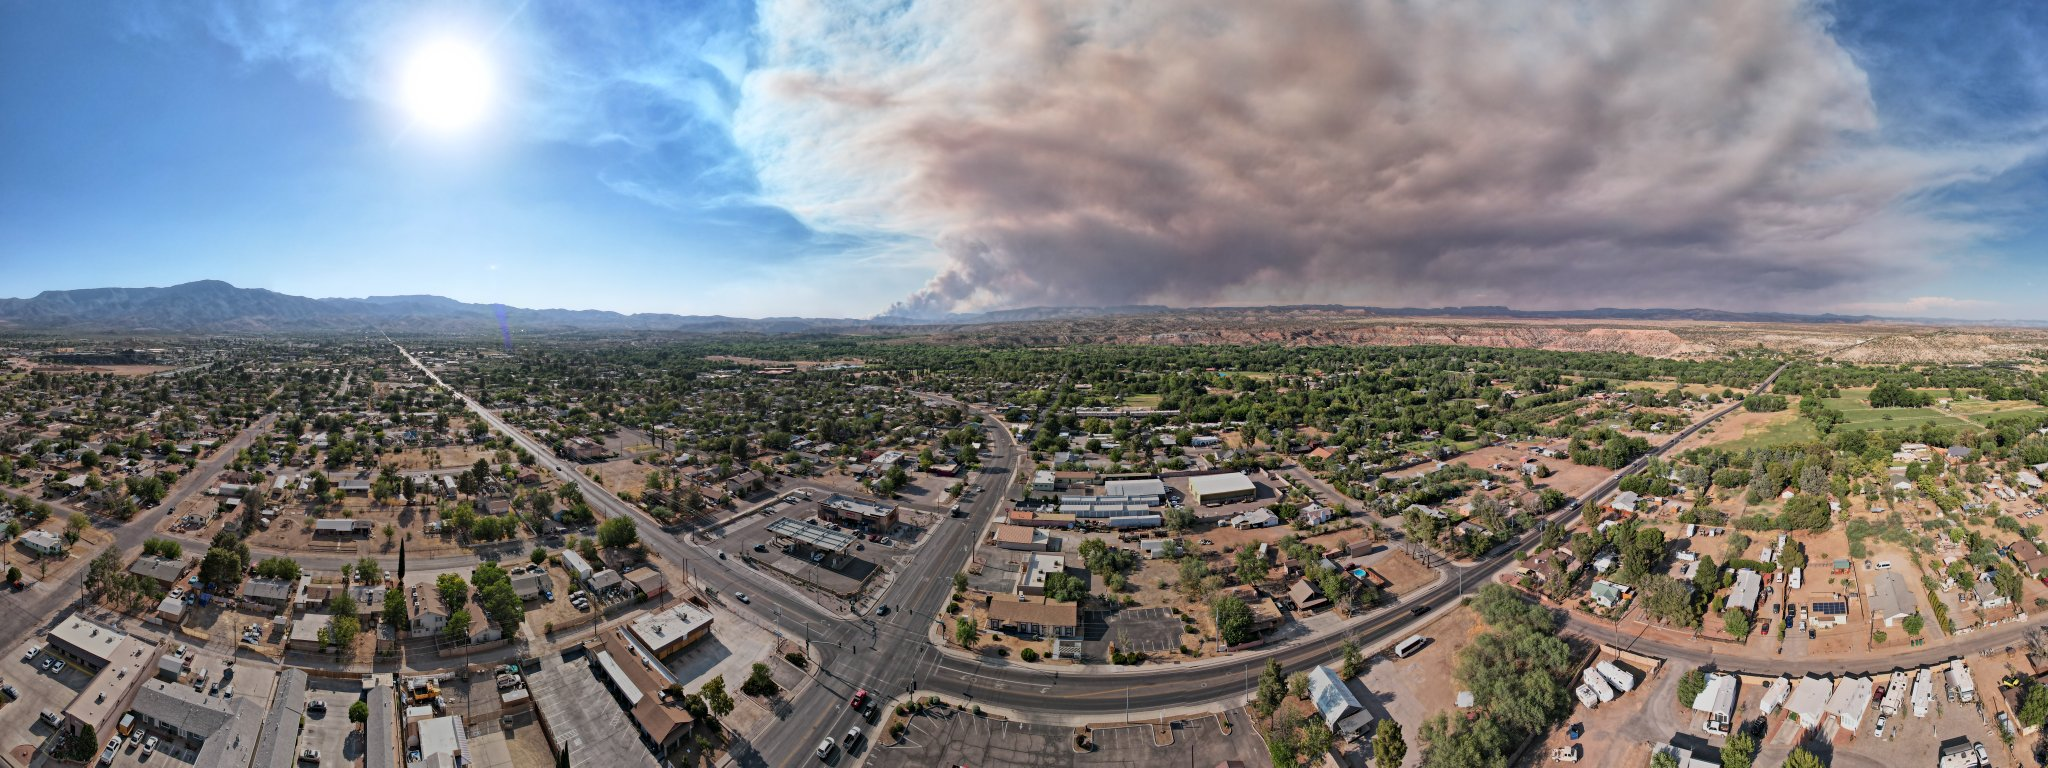 View of Rafael Fire as seen from Cottonwood looking northeastward towards the Mogollon Rim